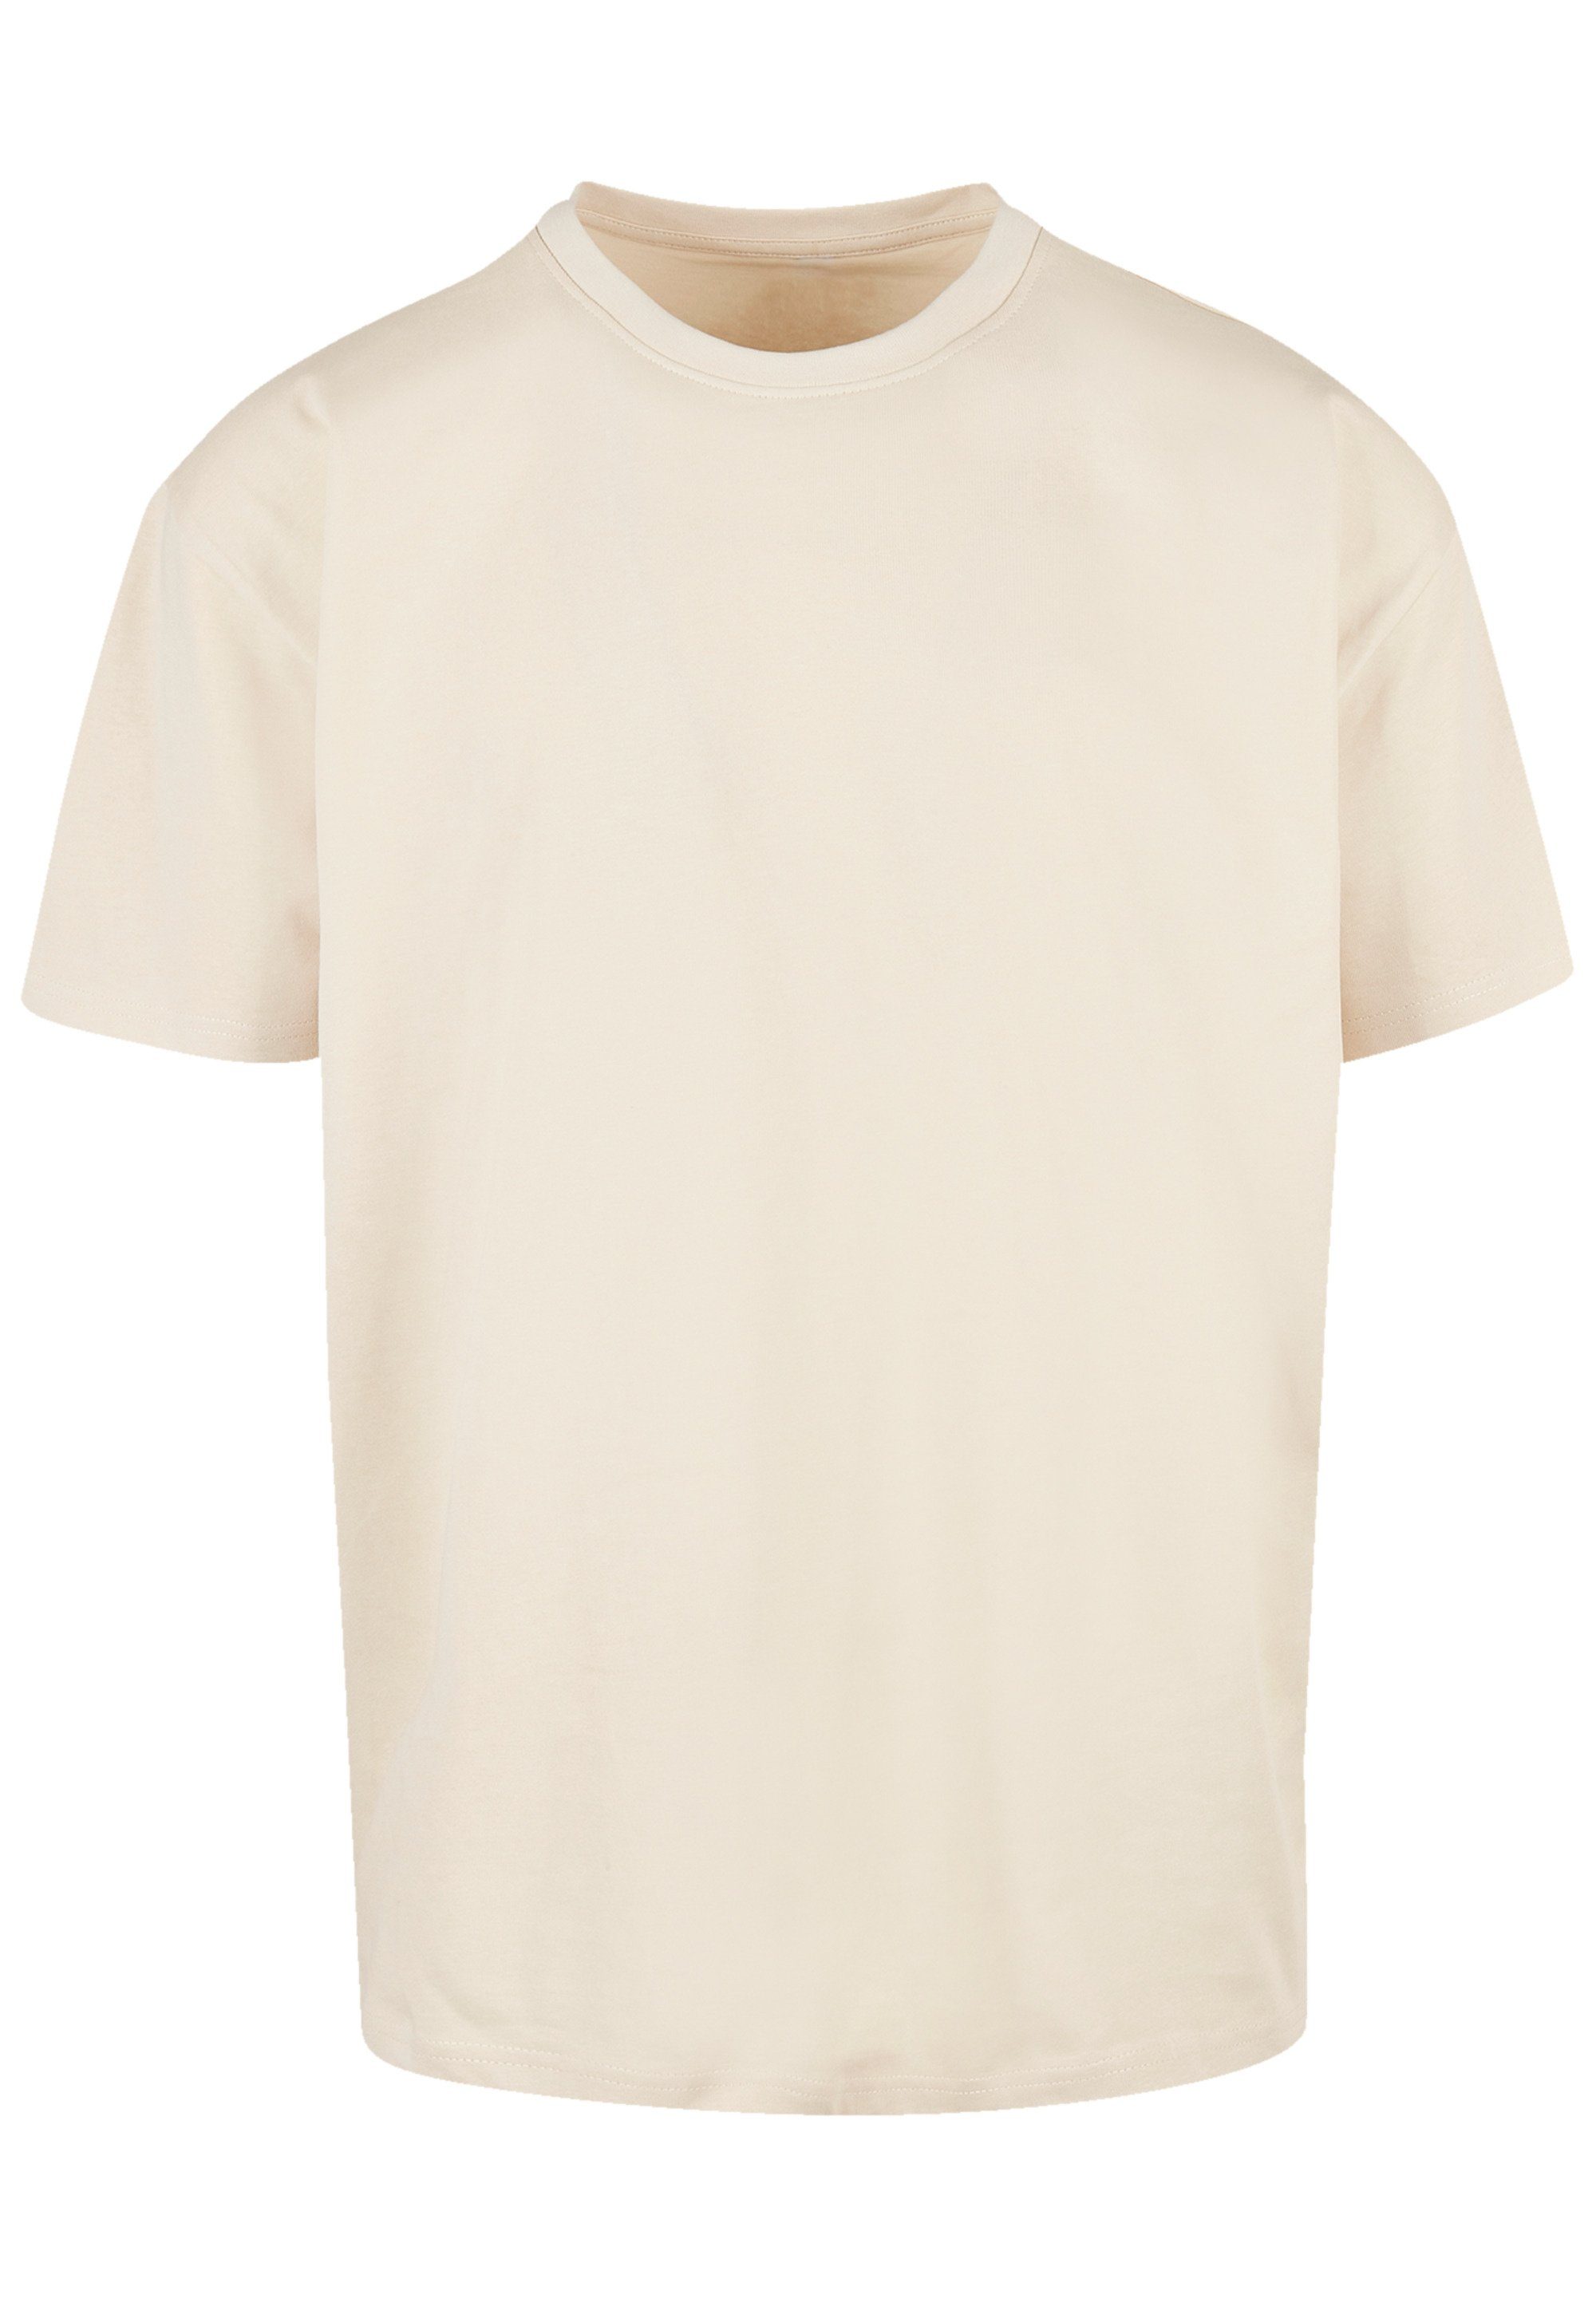 sand F4NT4STIC T-Shirt Golden Gai Drache Print